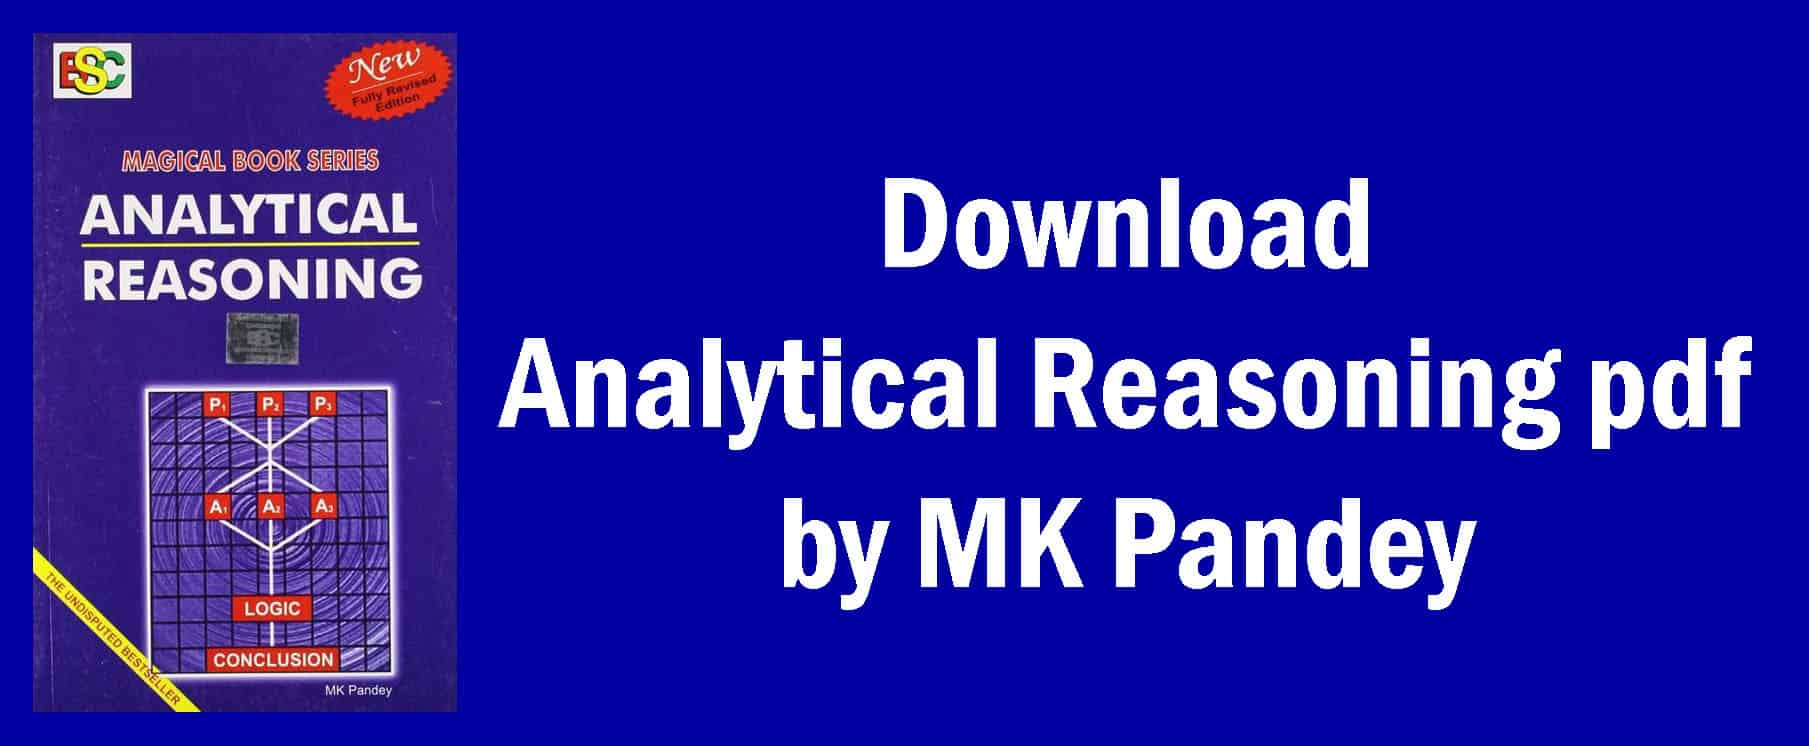 Download Analytical Reasoning pdf by MK Pandey